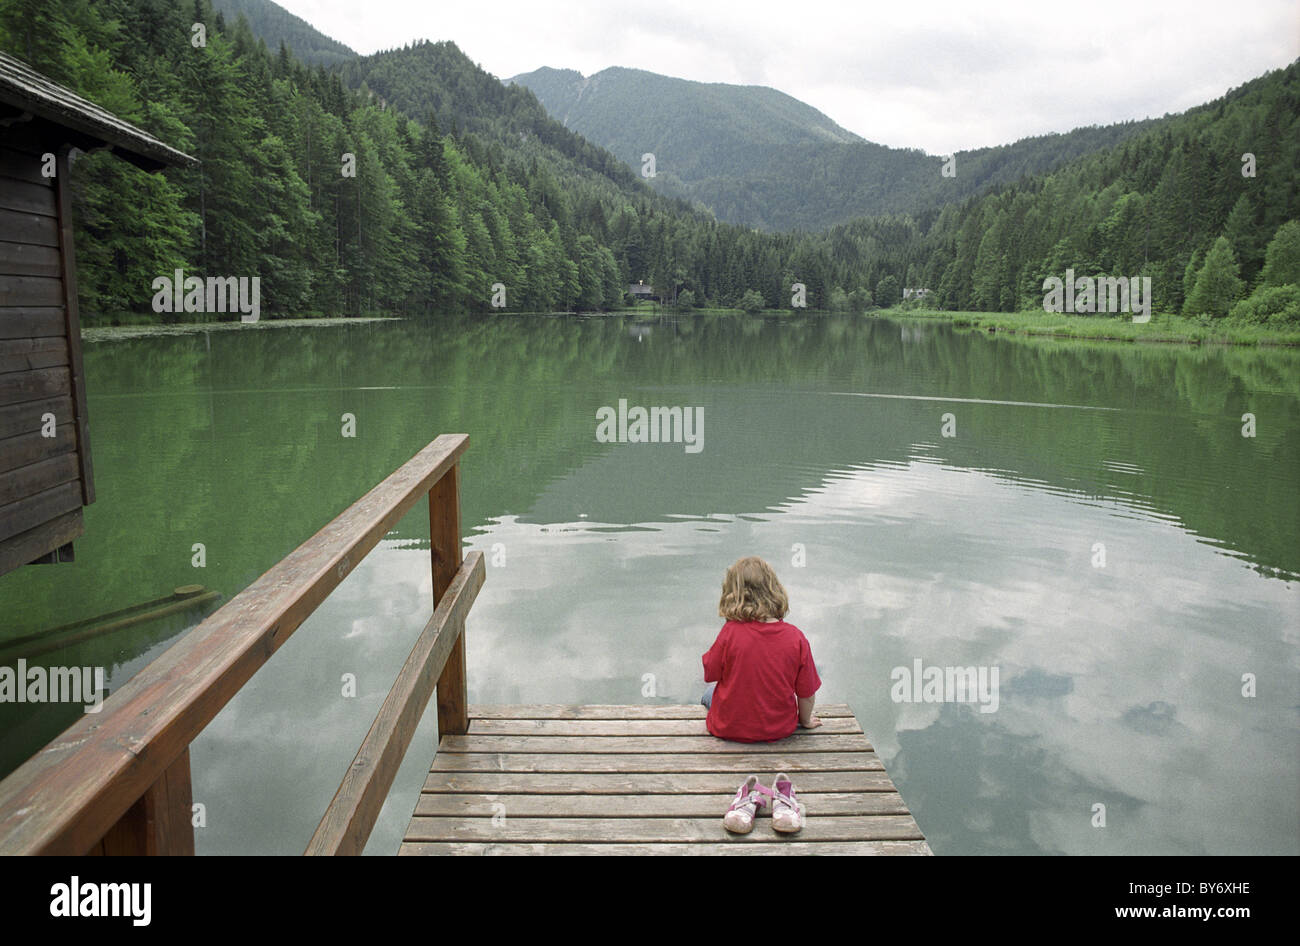 A little girl sitting by a lake, Schaffner Weiher, Stodertal, Austria, Alps, Europe Stock Photo